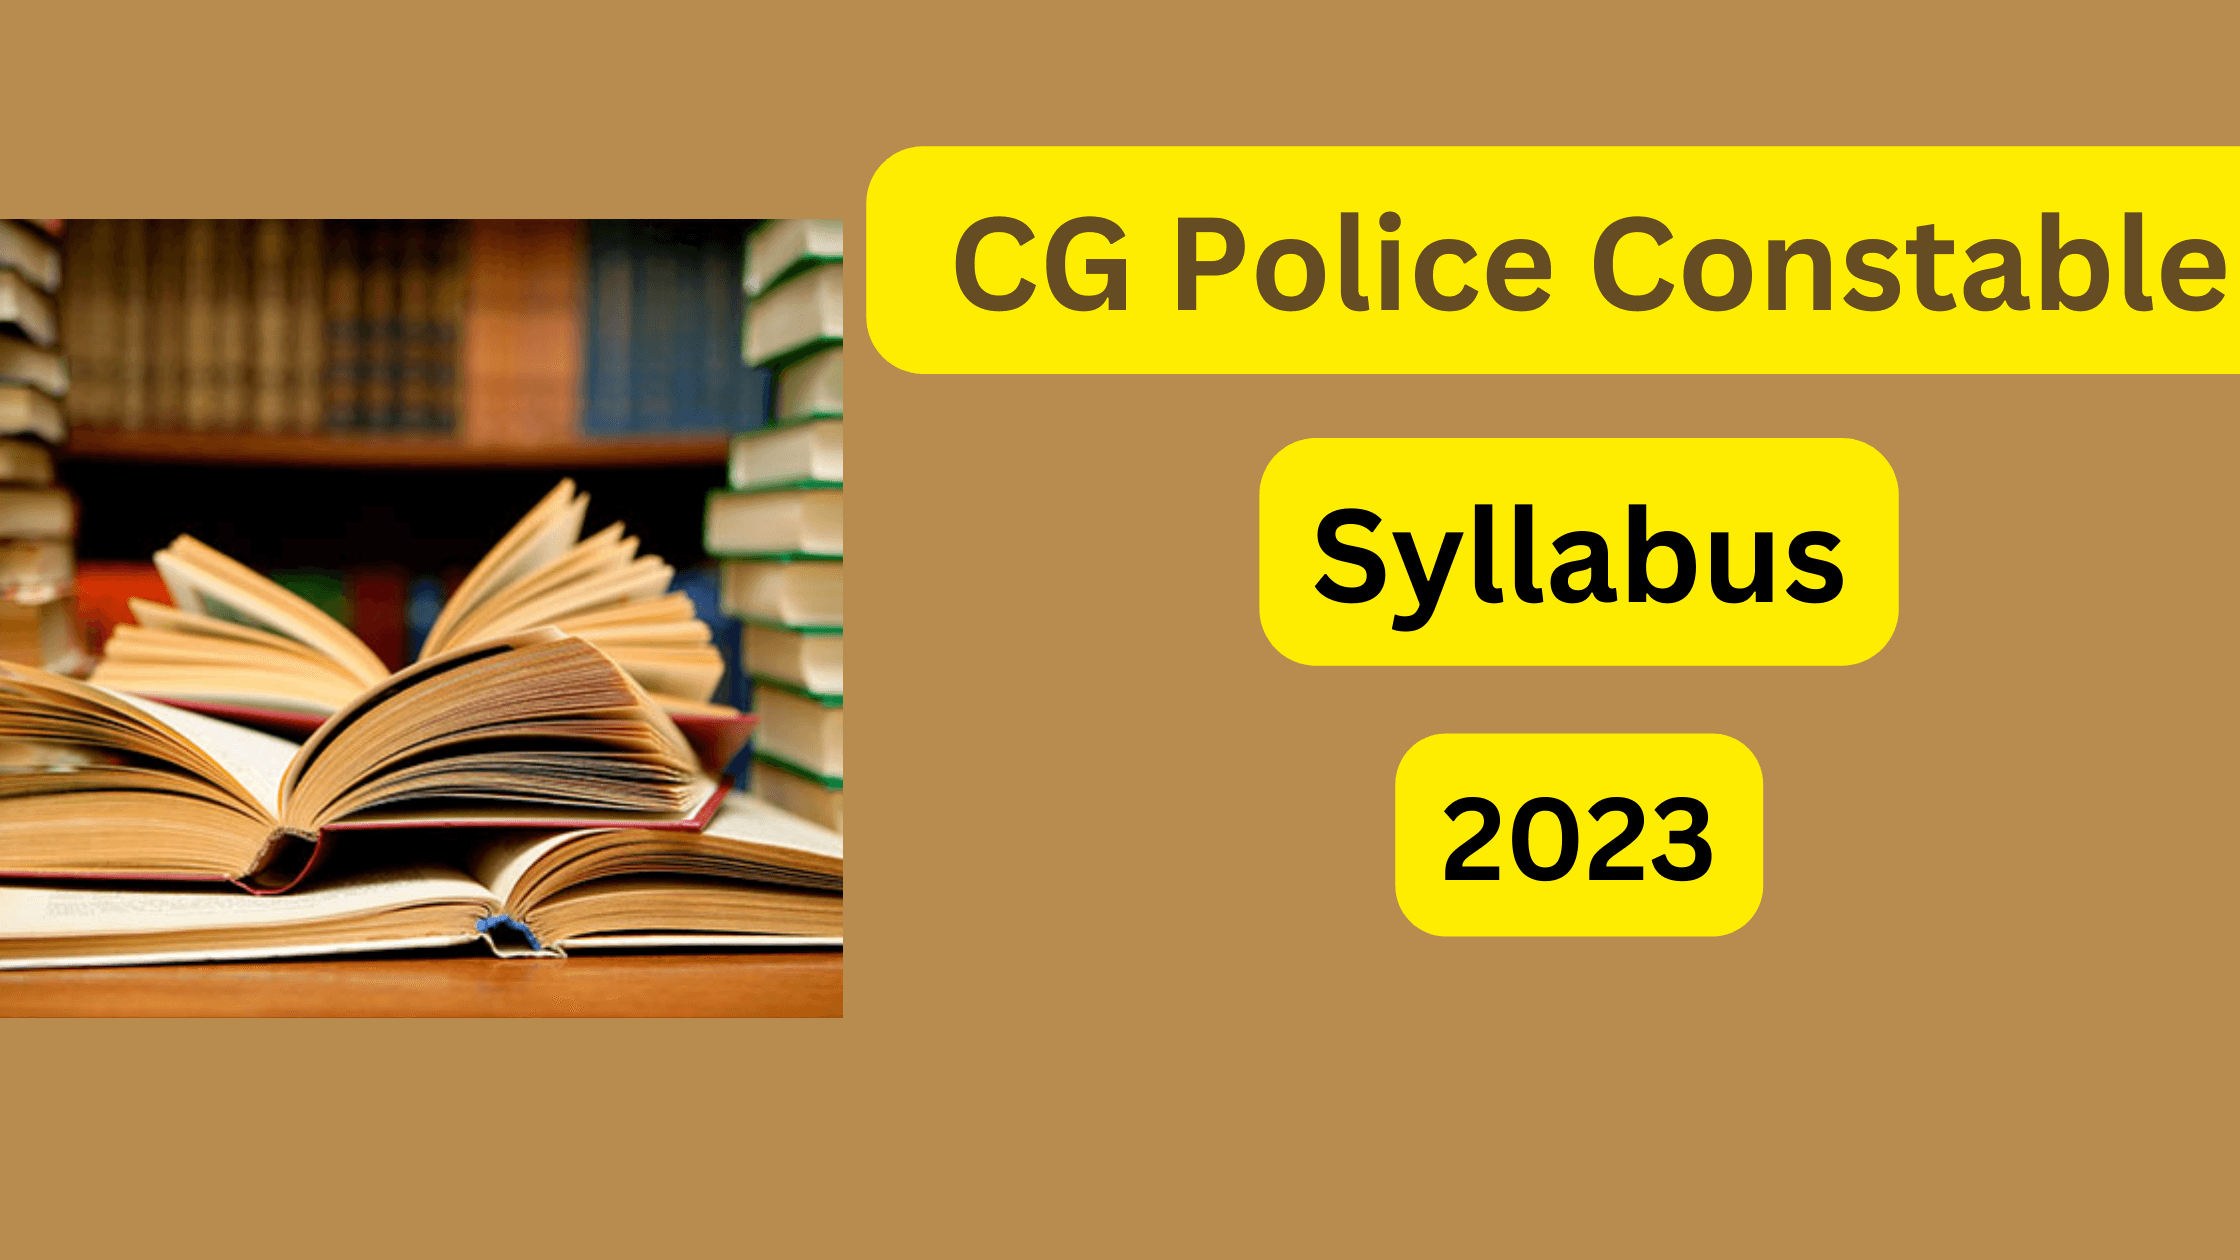 CG Police Constable Syllabus 2023